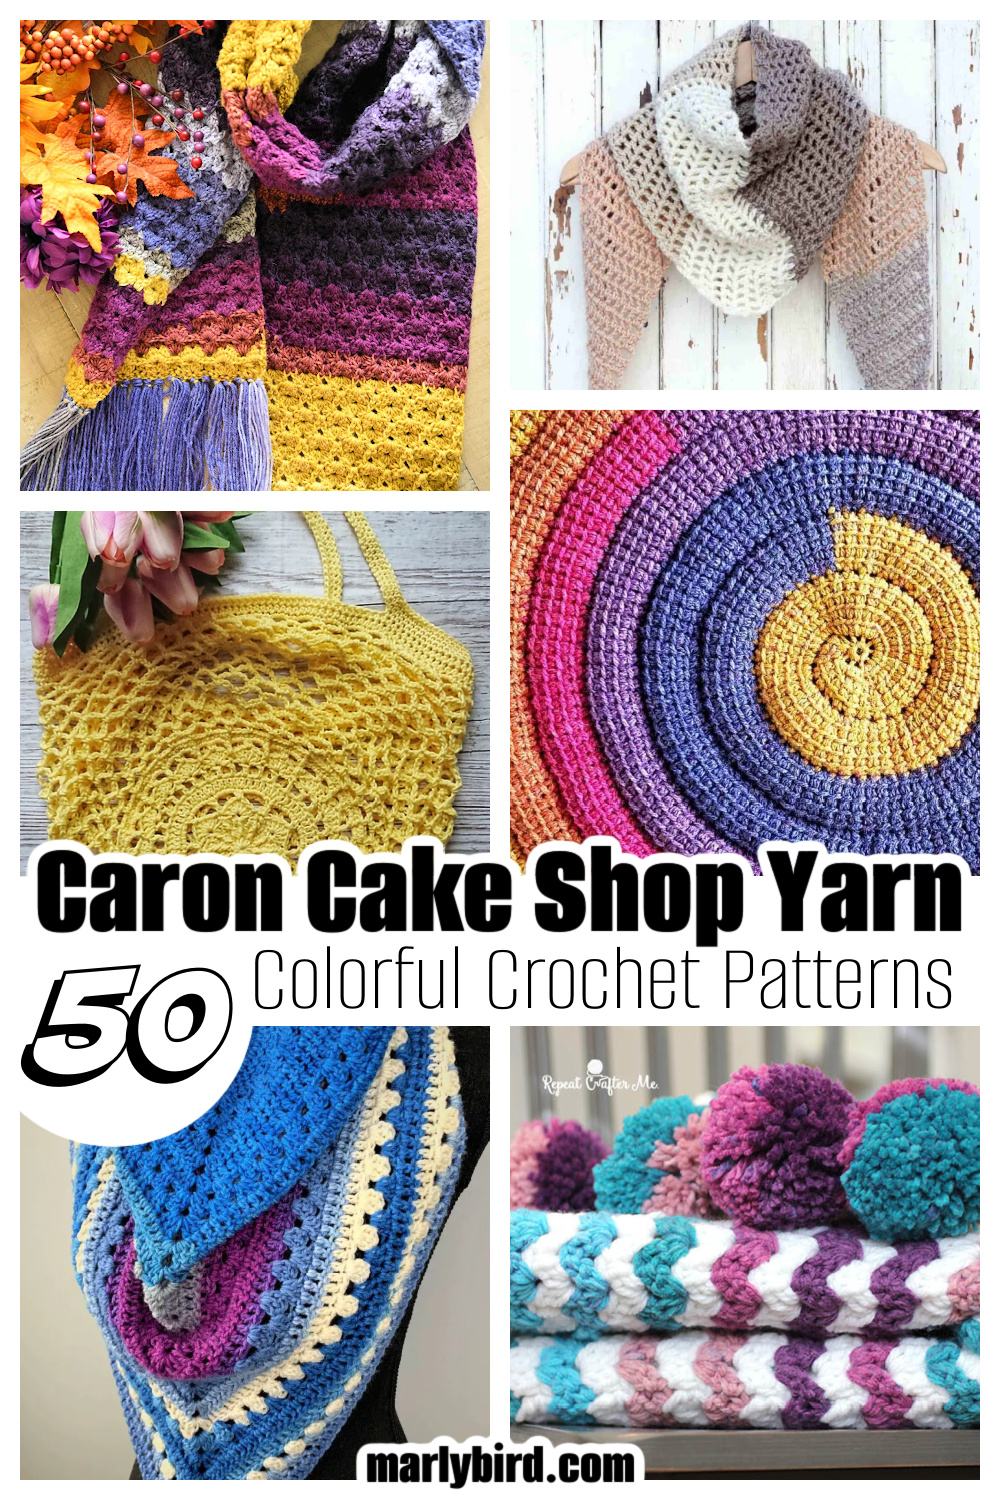 Caron Cake Shop Yarn, 50+ Crochet Patterns